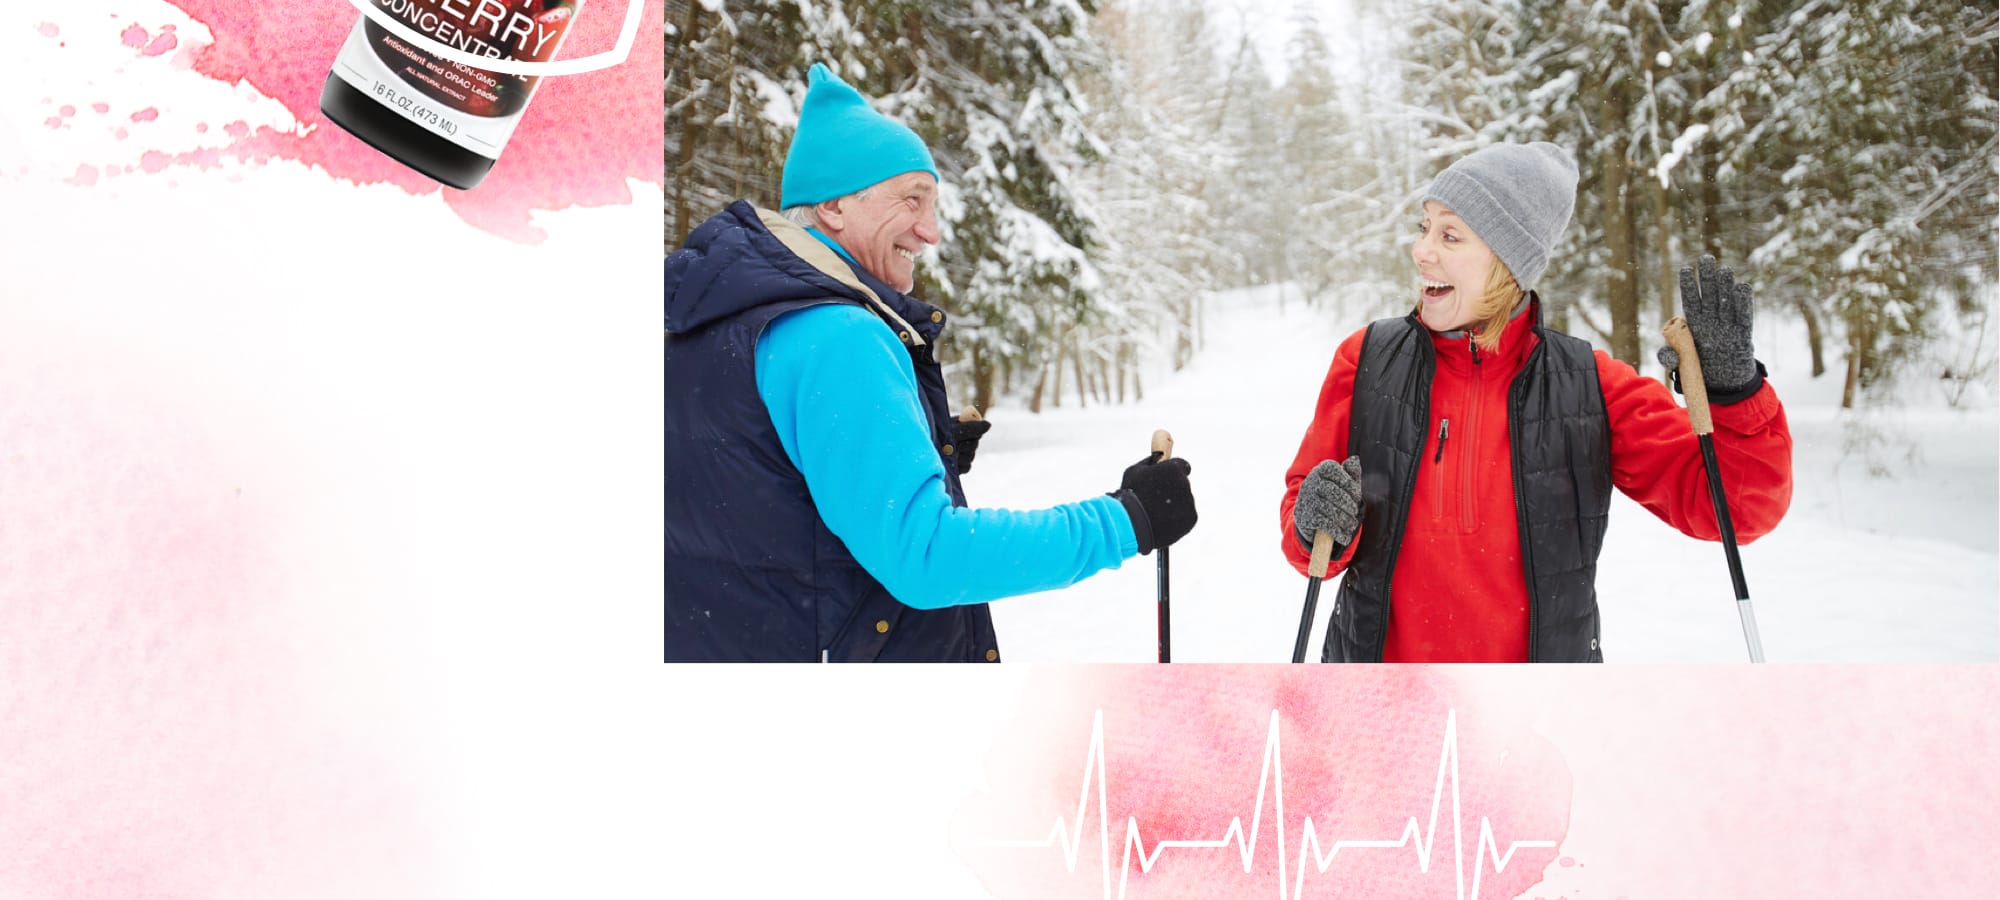 Elderly man and women ski together and enjoy active outdoor activities